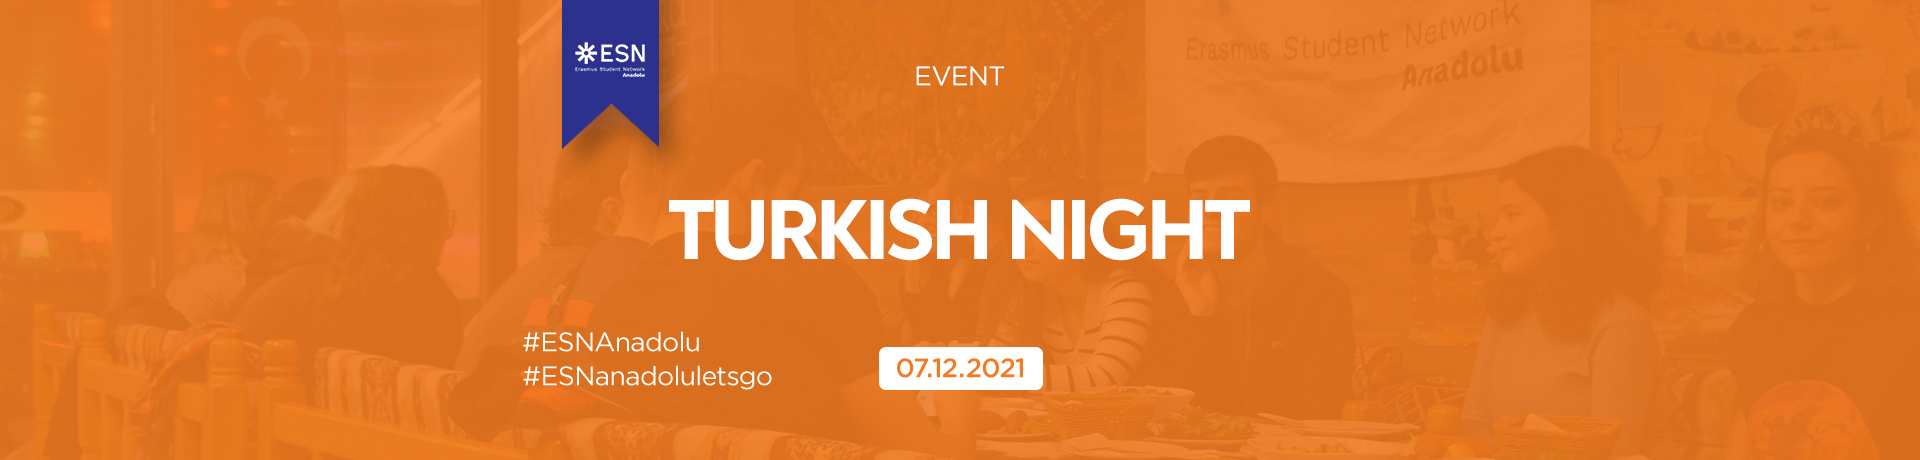 Thumbnail image for Turkish Night Event of ESN Anadolu